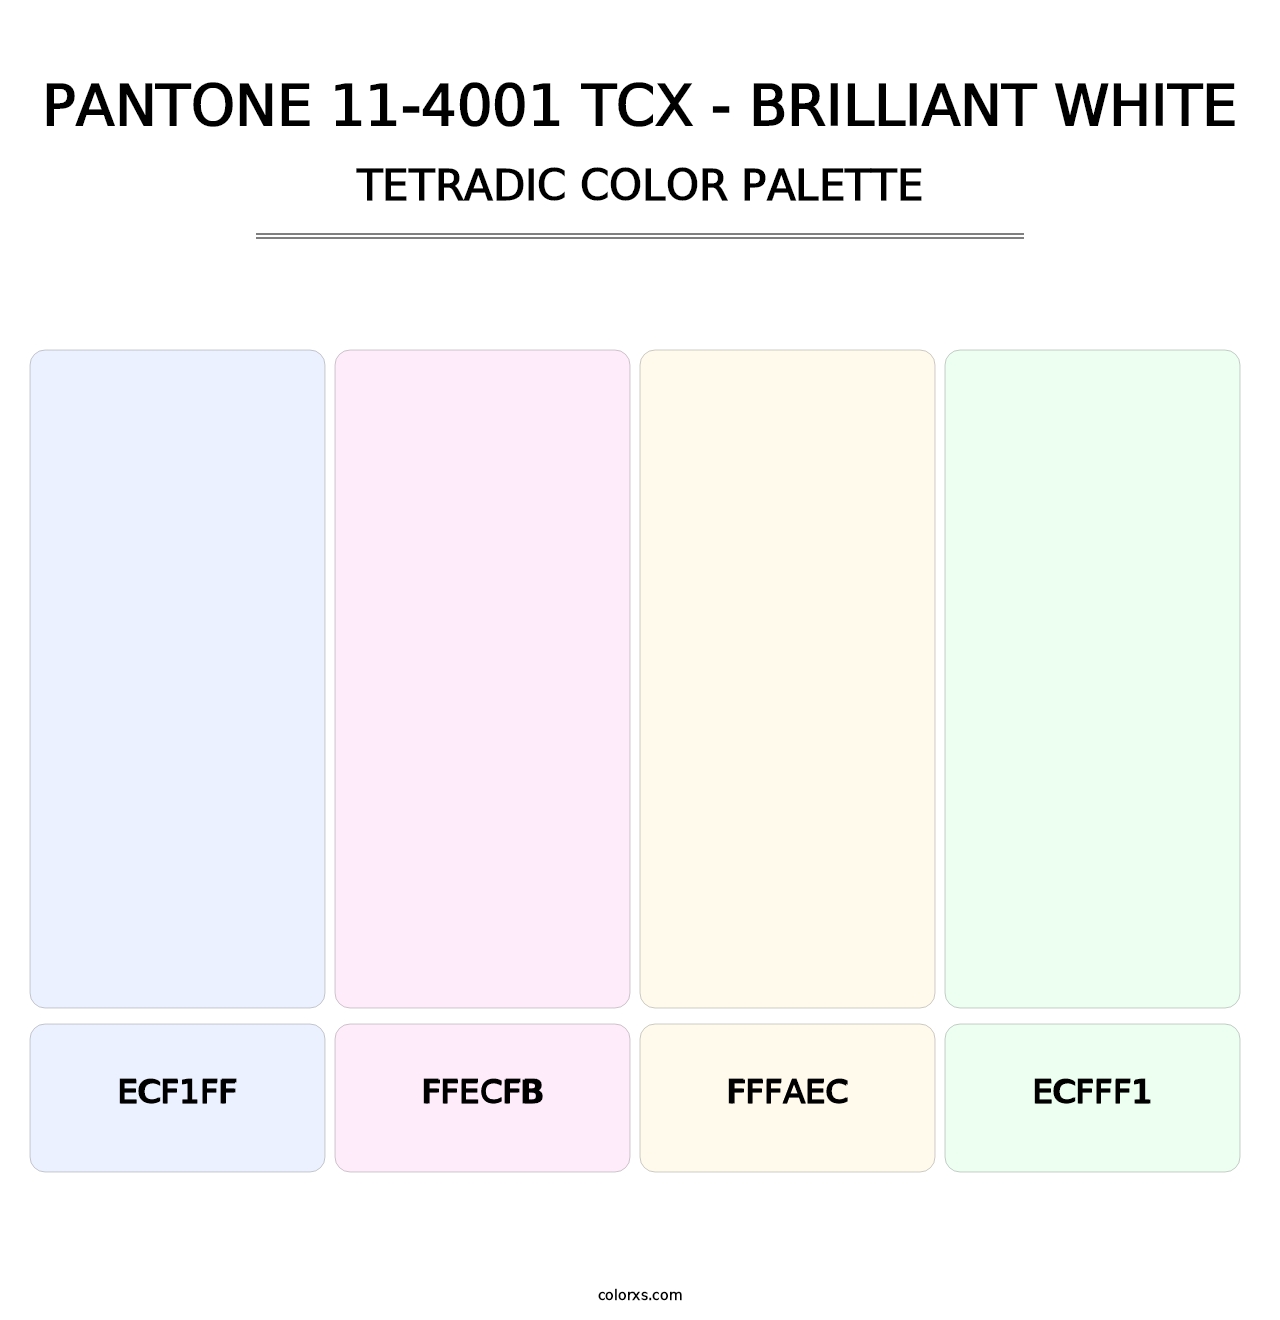 PANTONE 11-4001 TCX - Brilliant White - Tetradic Color Palette